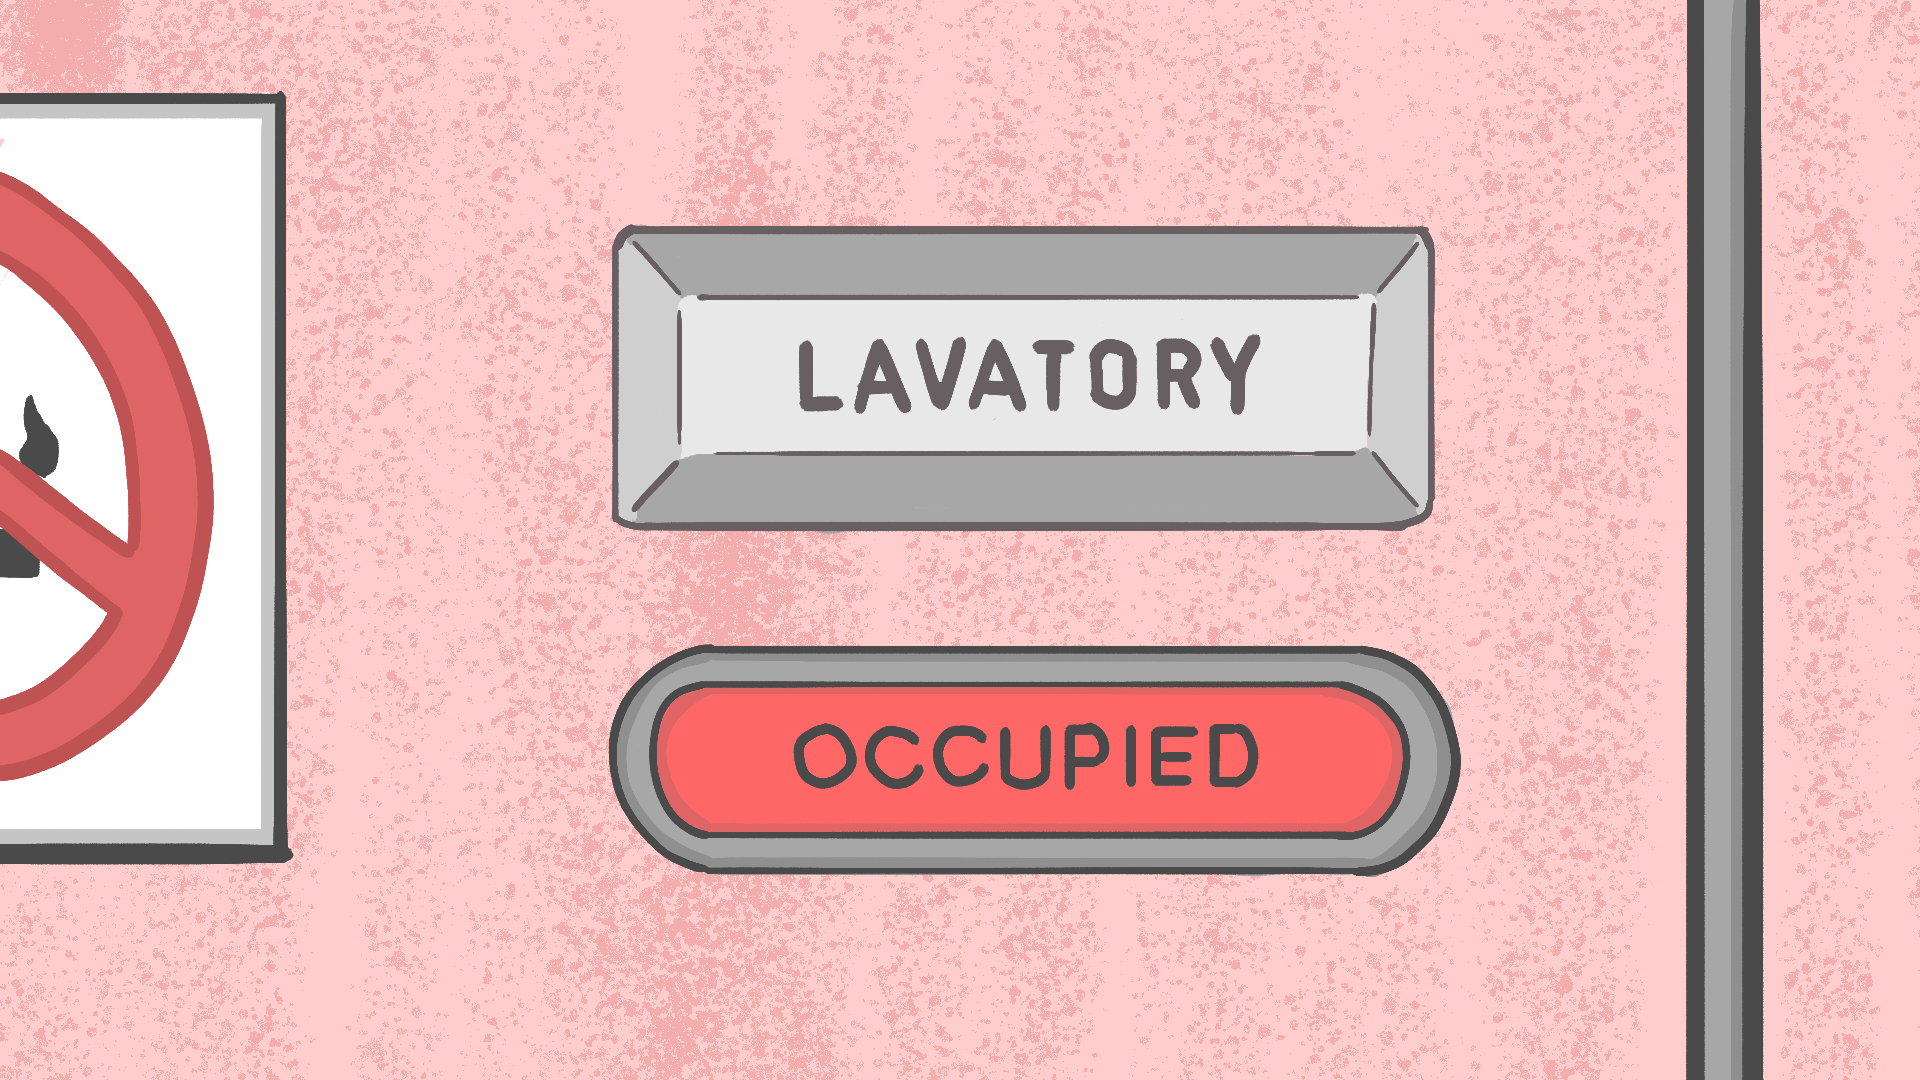 Lavatory occupied